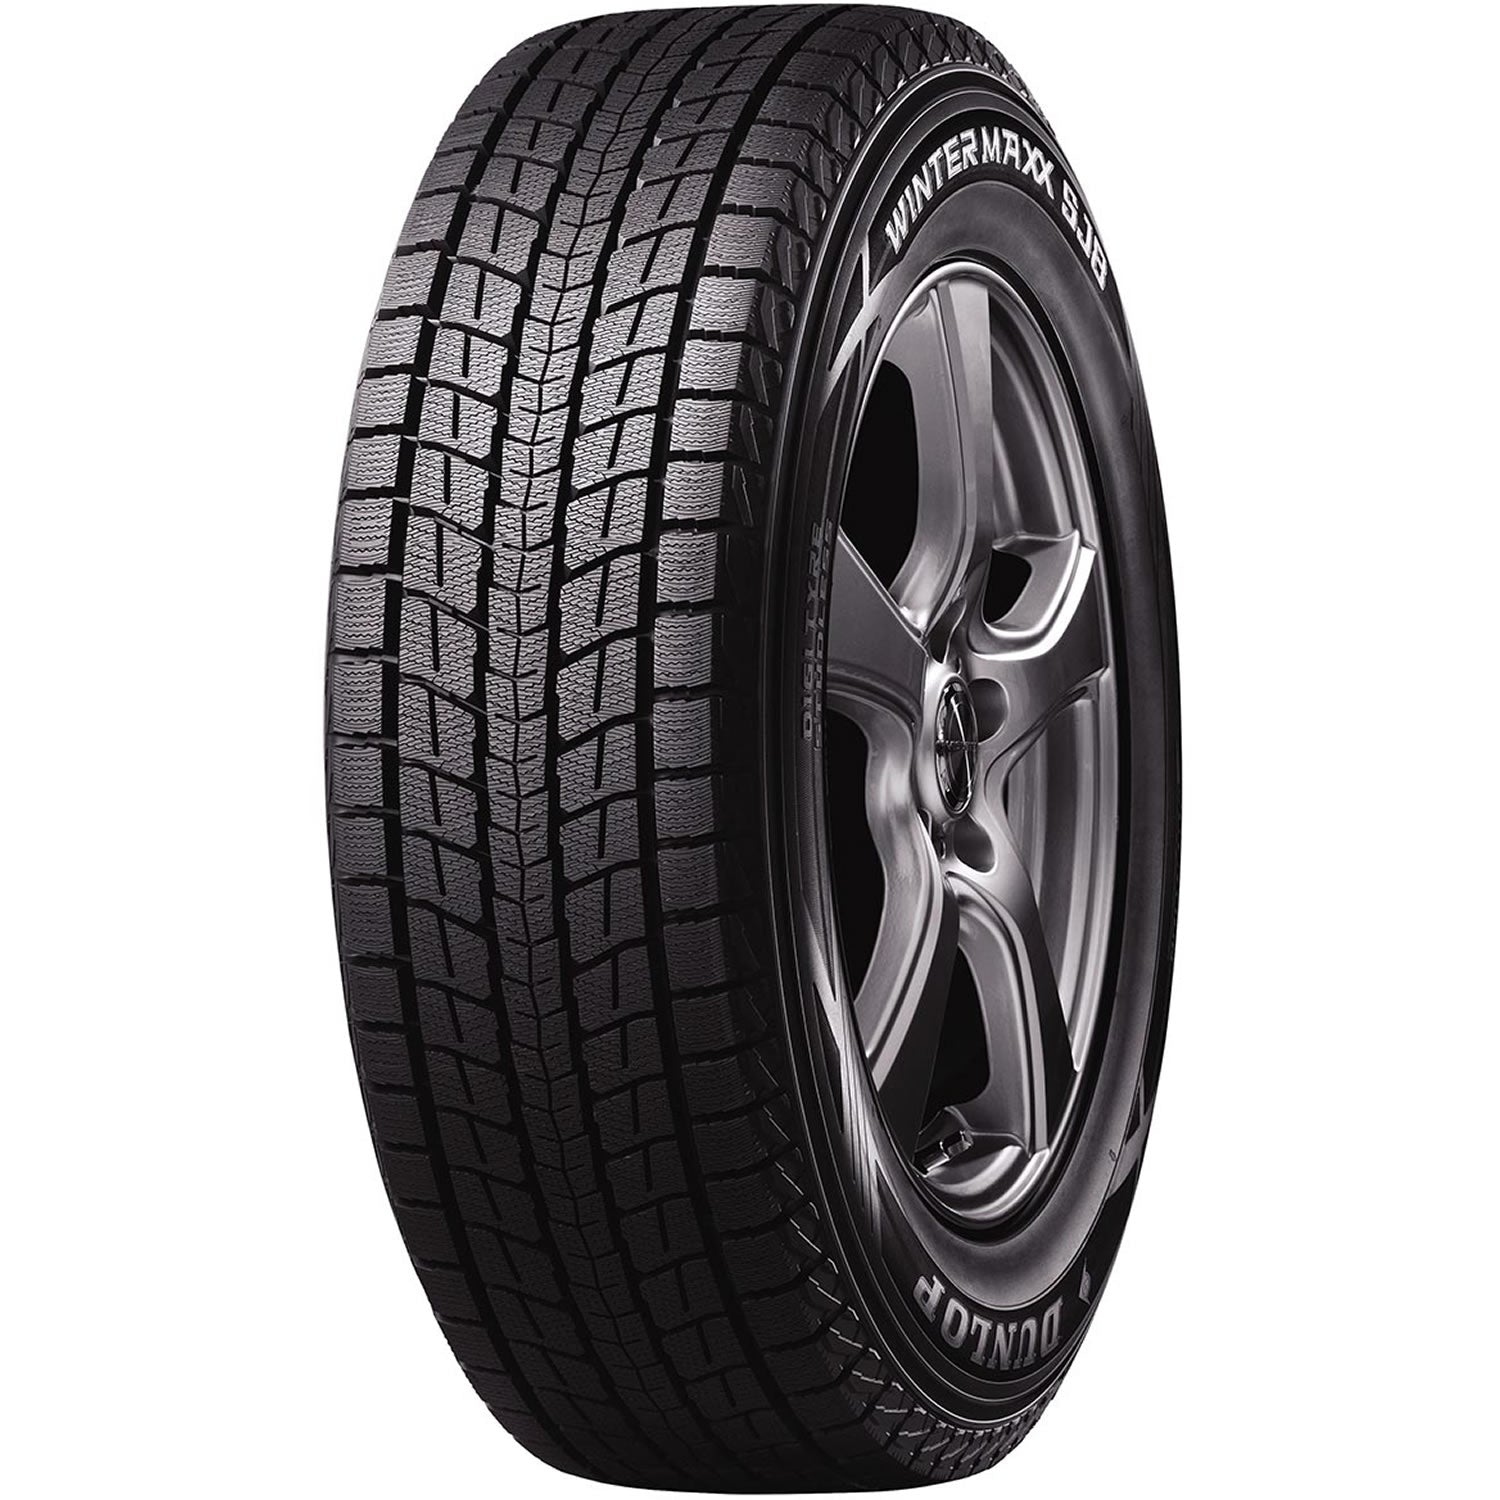 DUNLOP WINTER MAXX SJ8 235/55R19 (29.2X9.3R 19) Tires